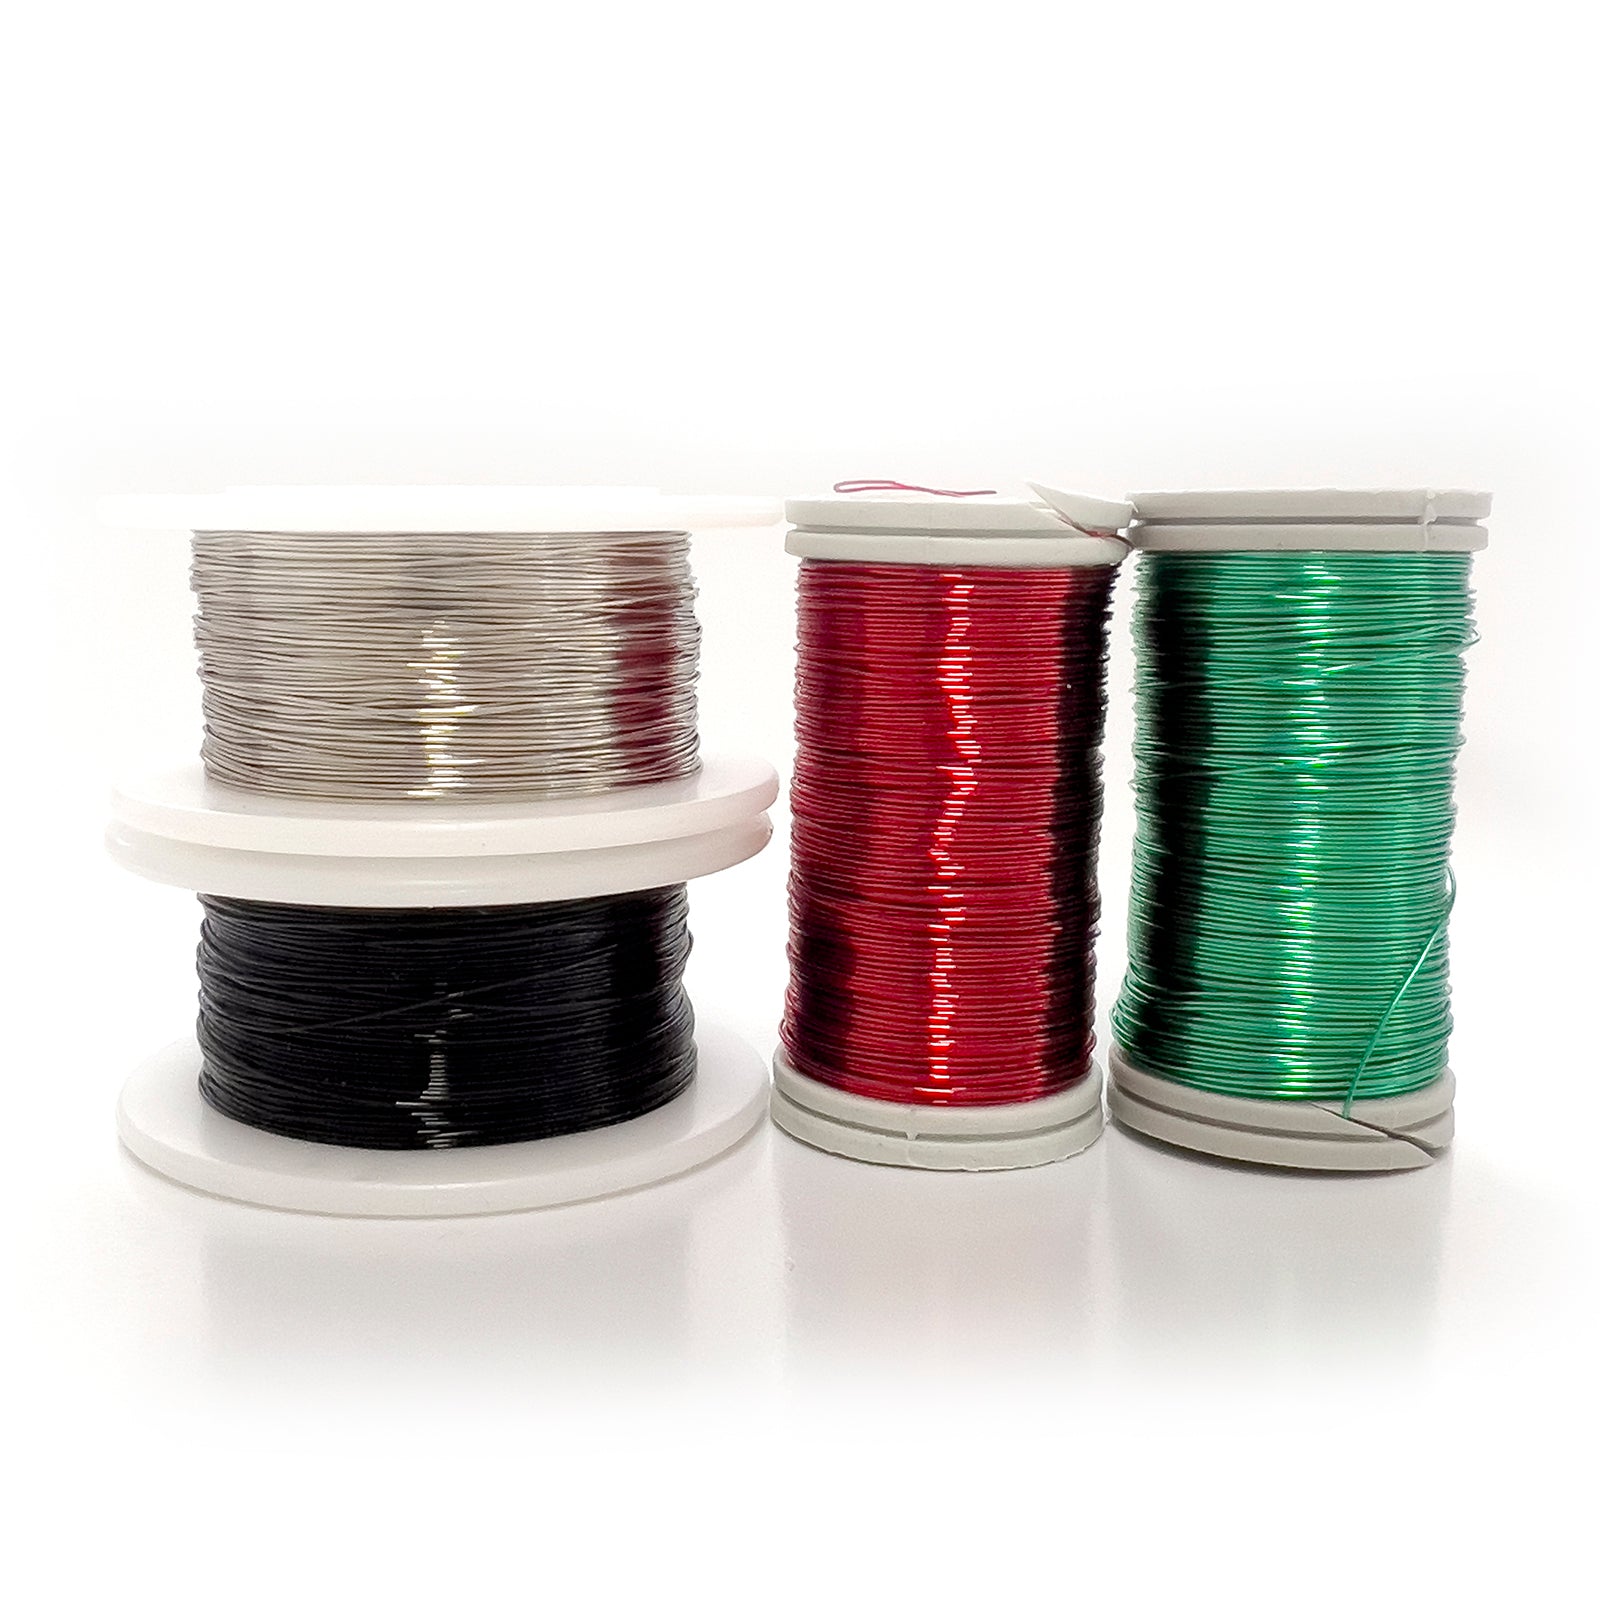 Jewelry making wire - Bedouin needlework inspiration - Black, Green, R -  Yooladesign